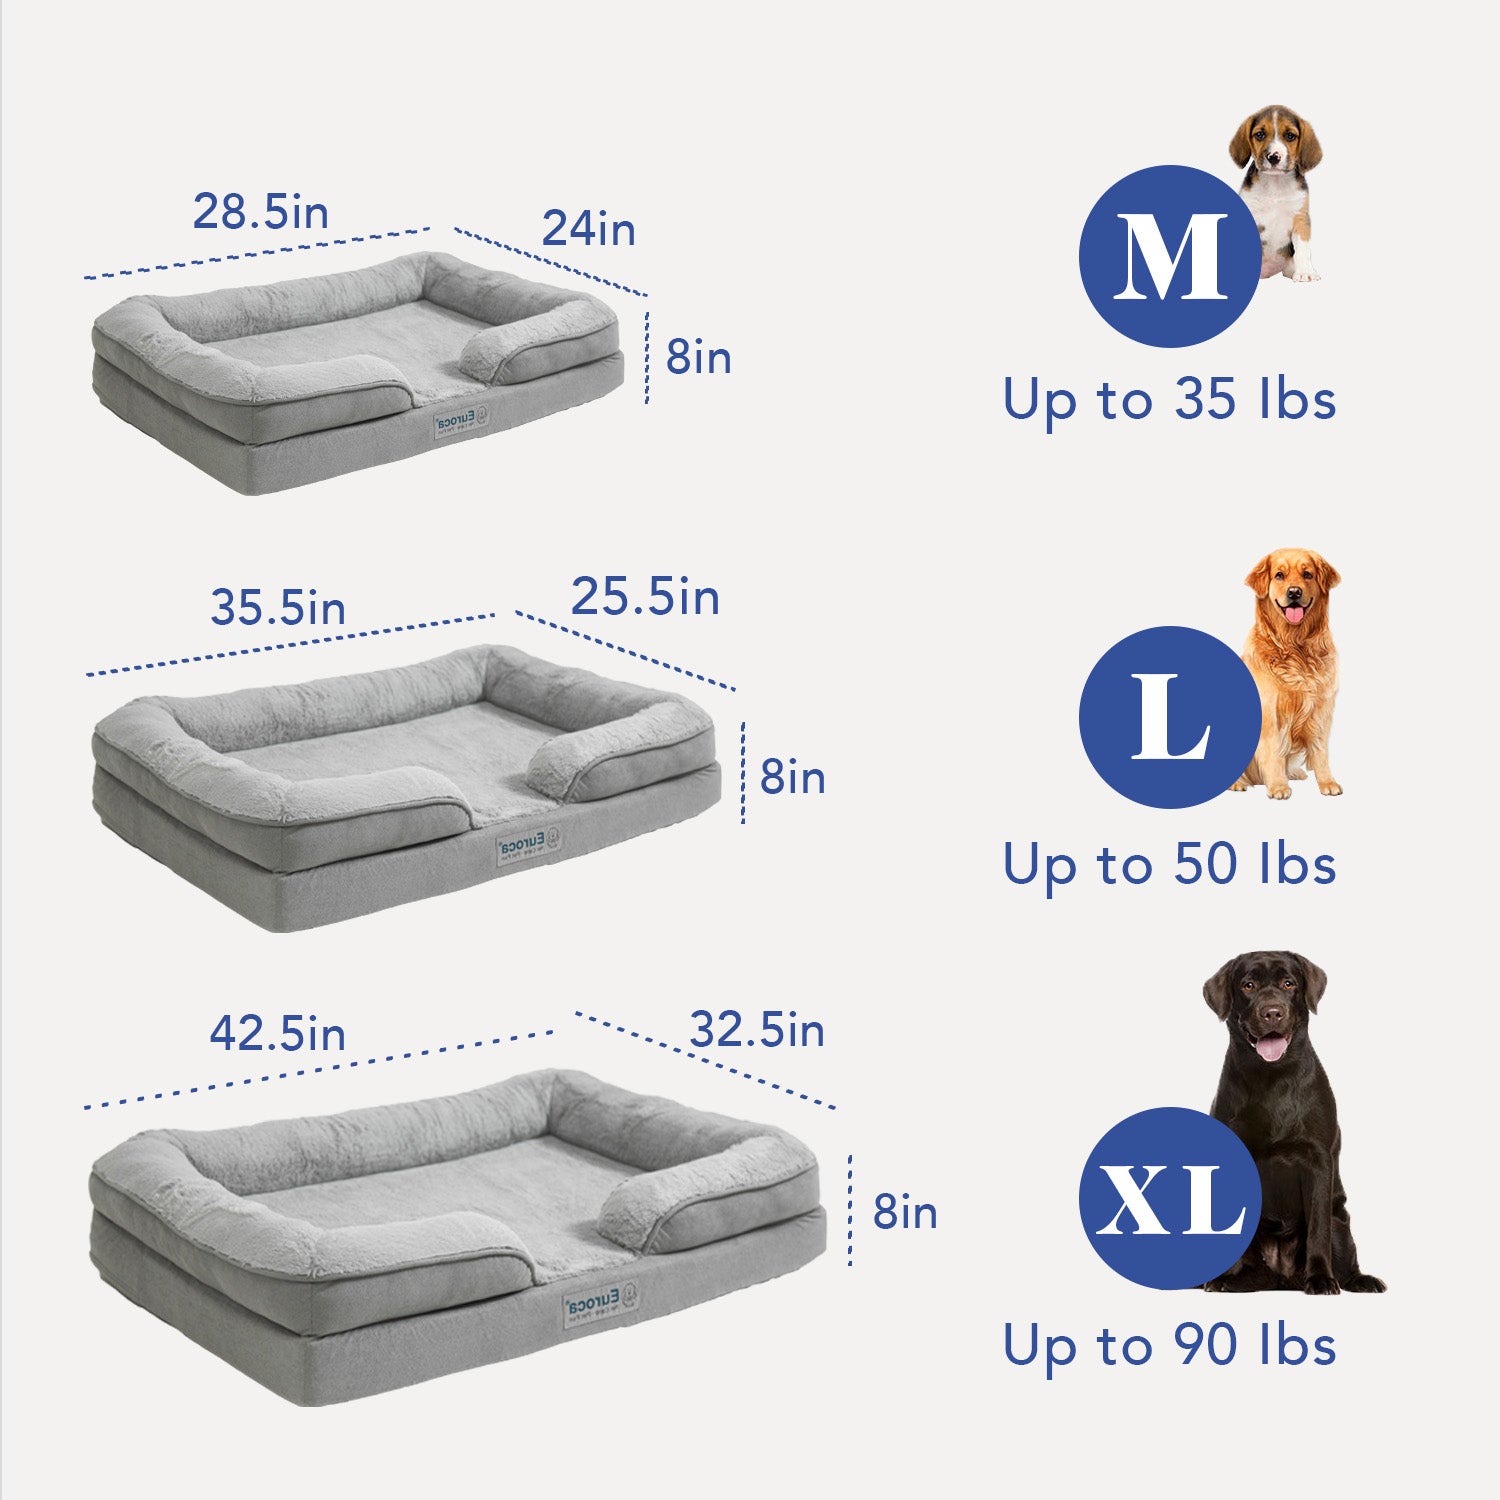 Euroca Orthopedic Dog Bed, Waterproof, Foam Sofa with Removable